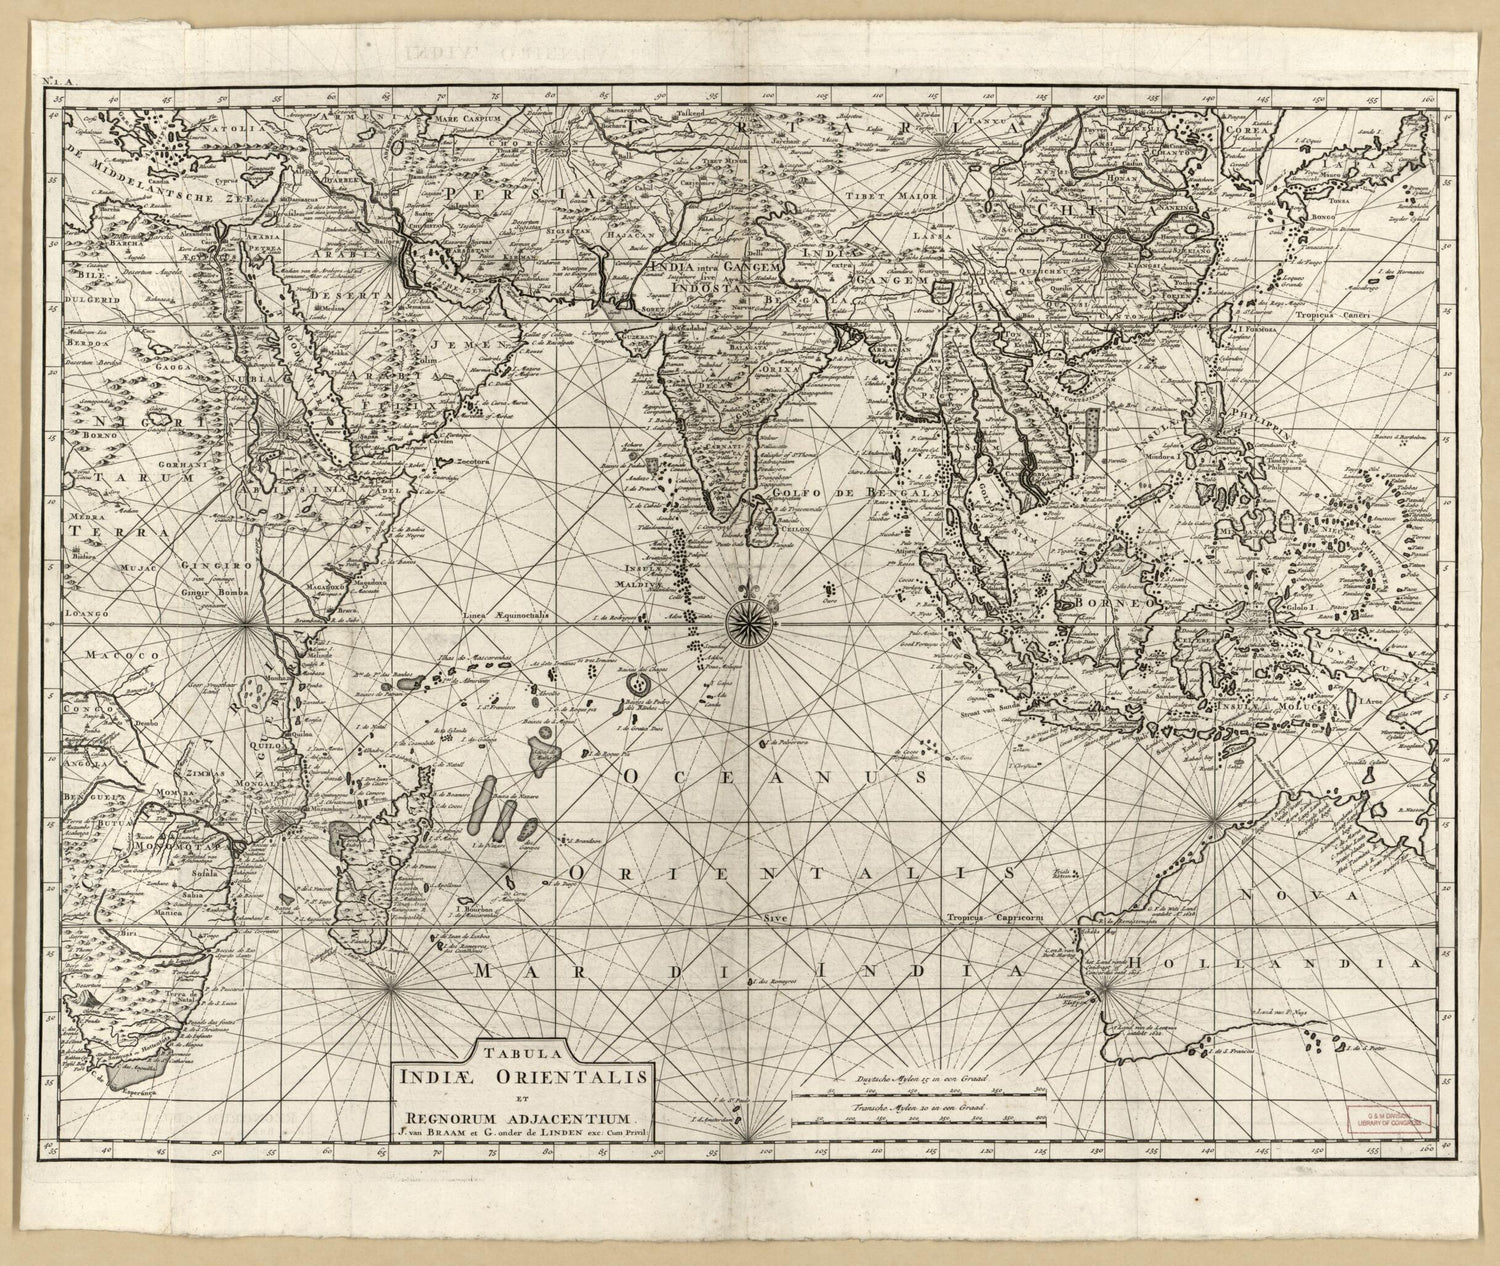 This old map of Tabula Indiae Orientalis Et Regnorum Adjacentium from 1726 was created by Joannes Van Braam, G. Onder De Linden, François Valentijn in 1726